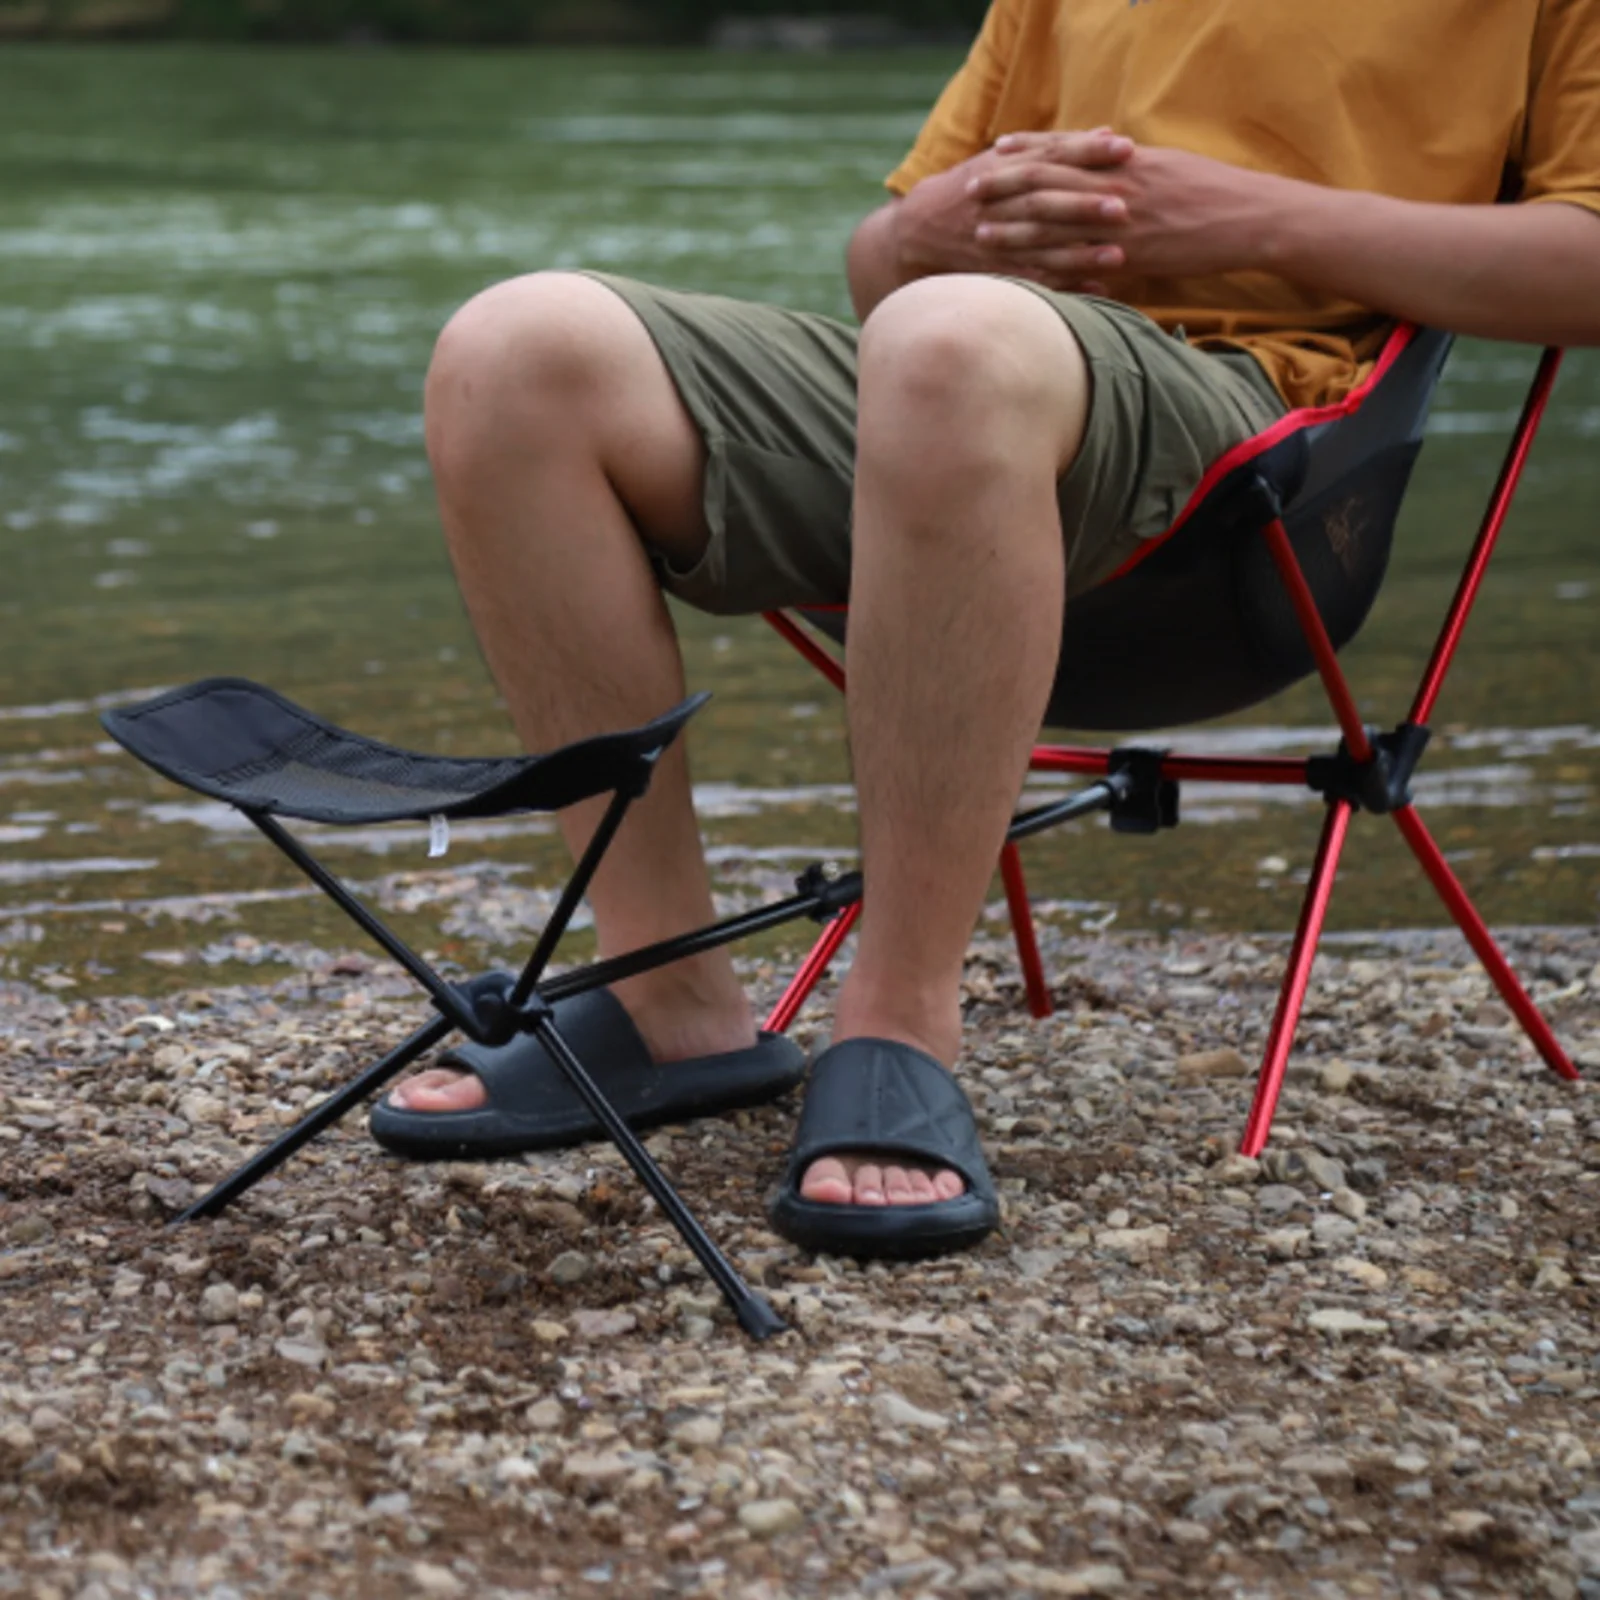 Ultralight Folding Chair Footrest, Foldable Feet Legs Rest, Non Slip Adjustable